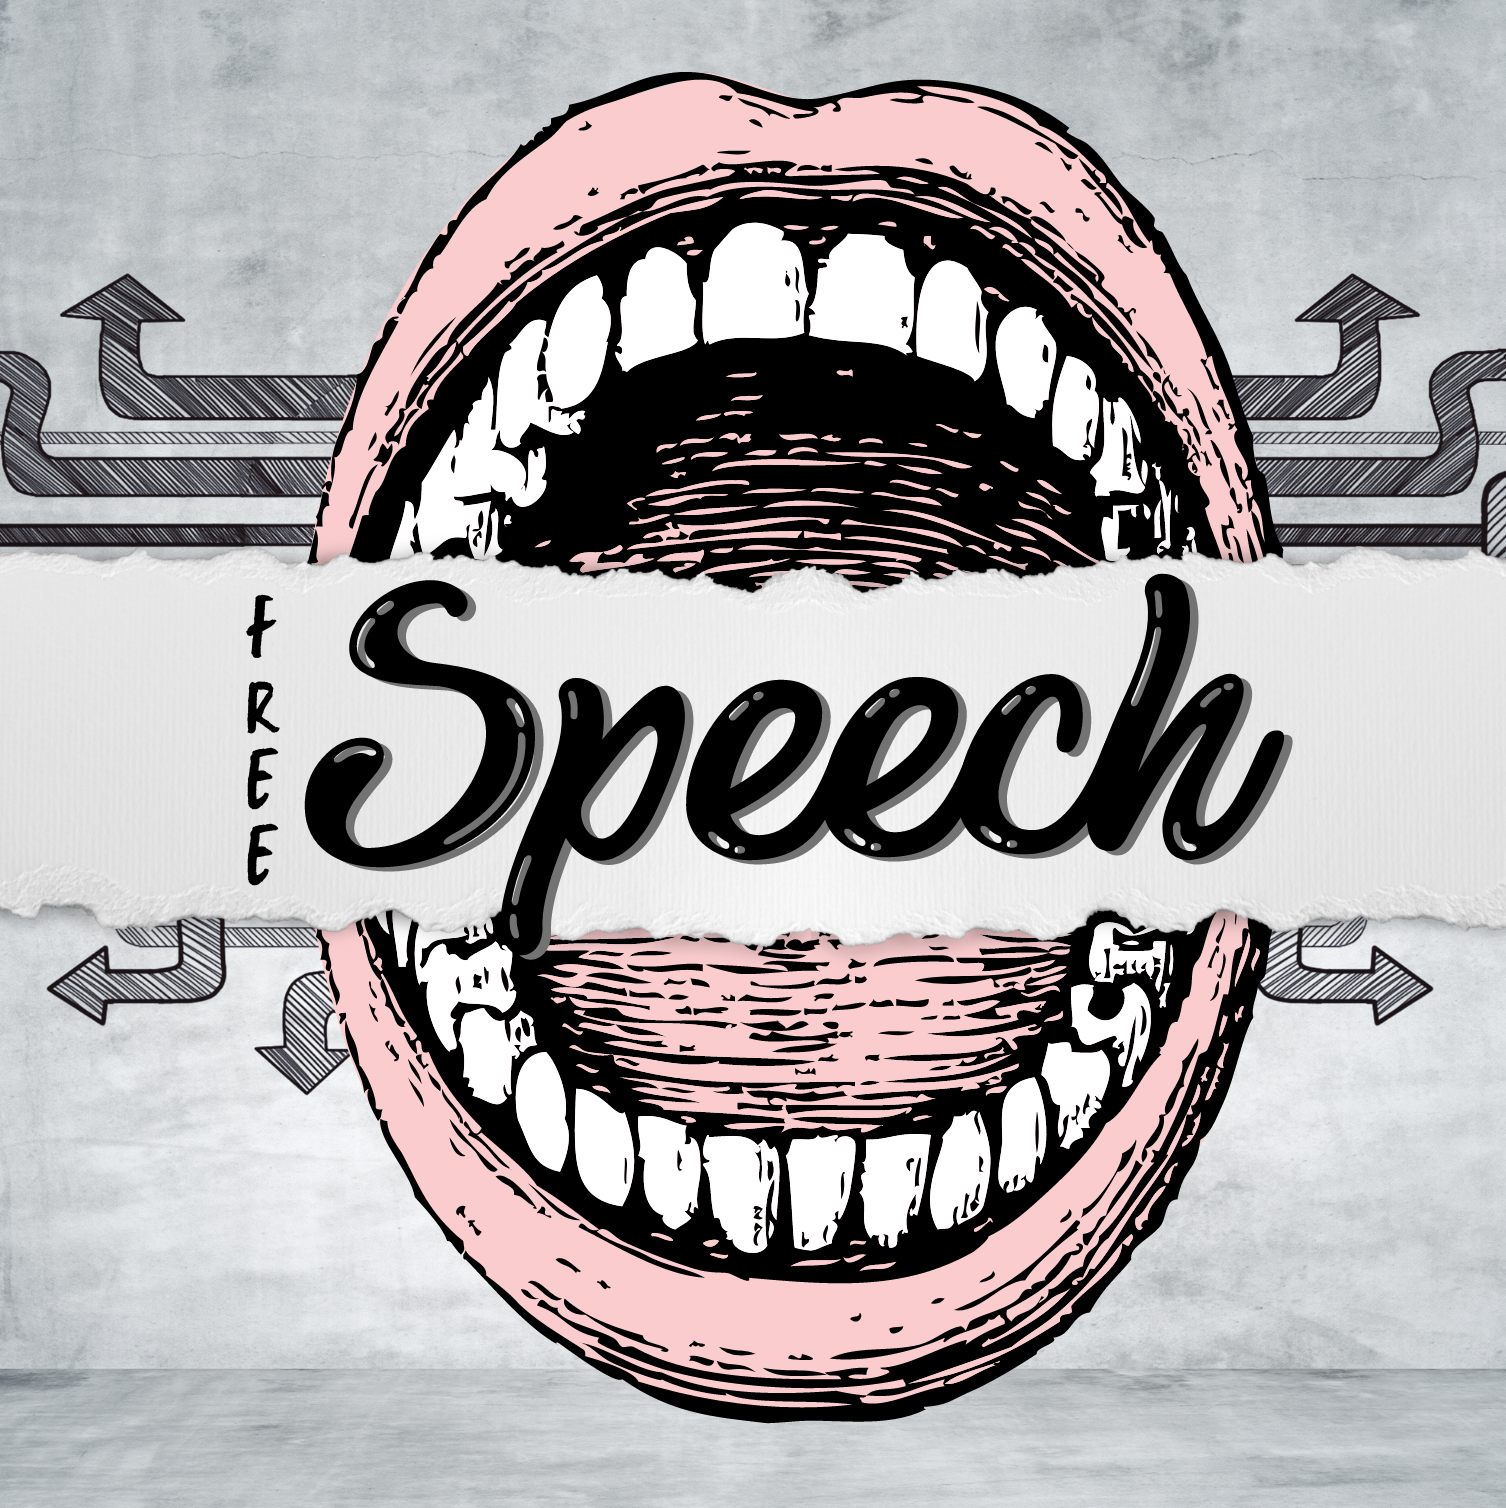 Creating Friction: Freedom of Speech